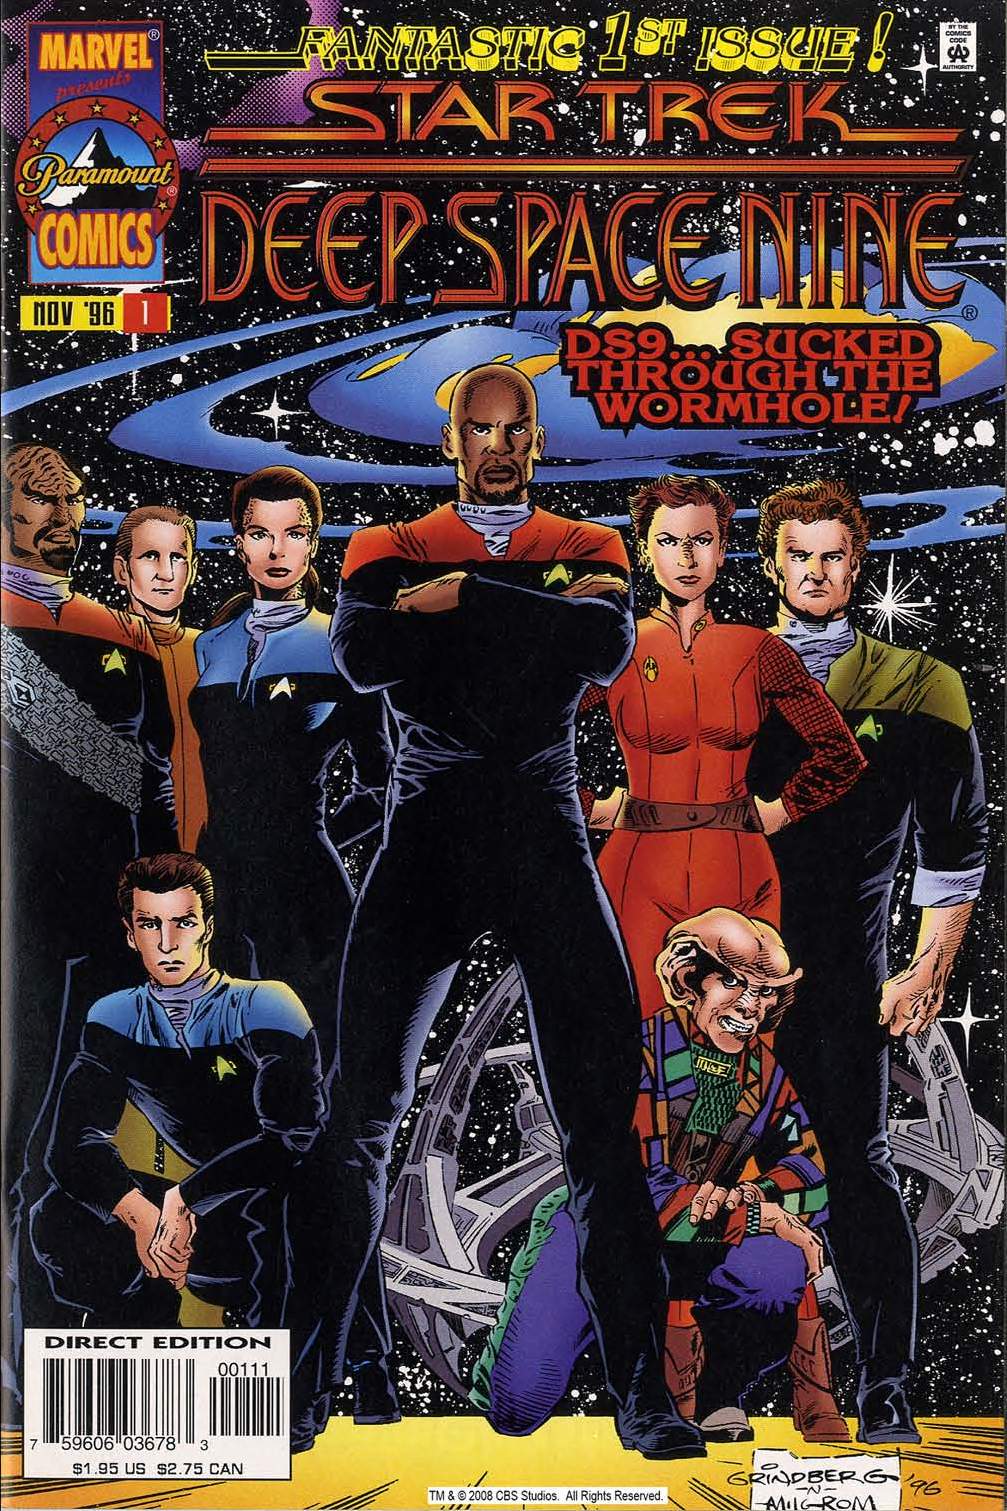 Star Trek: Deep Space Nine (1996) issue 1 - Page 1